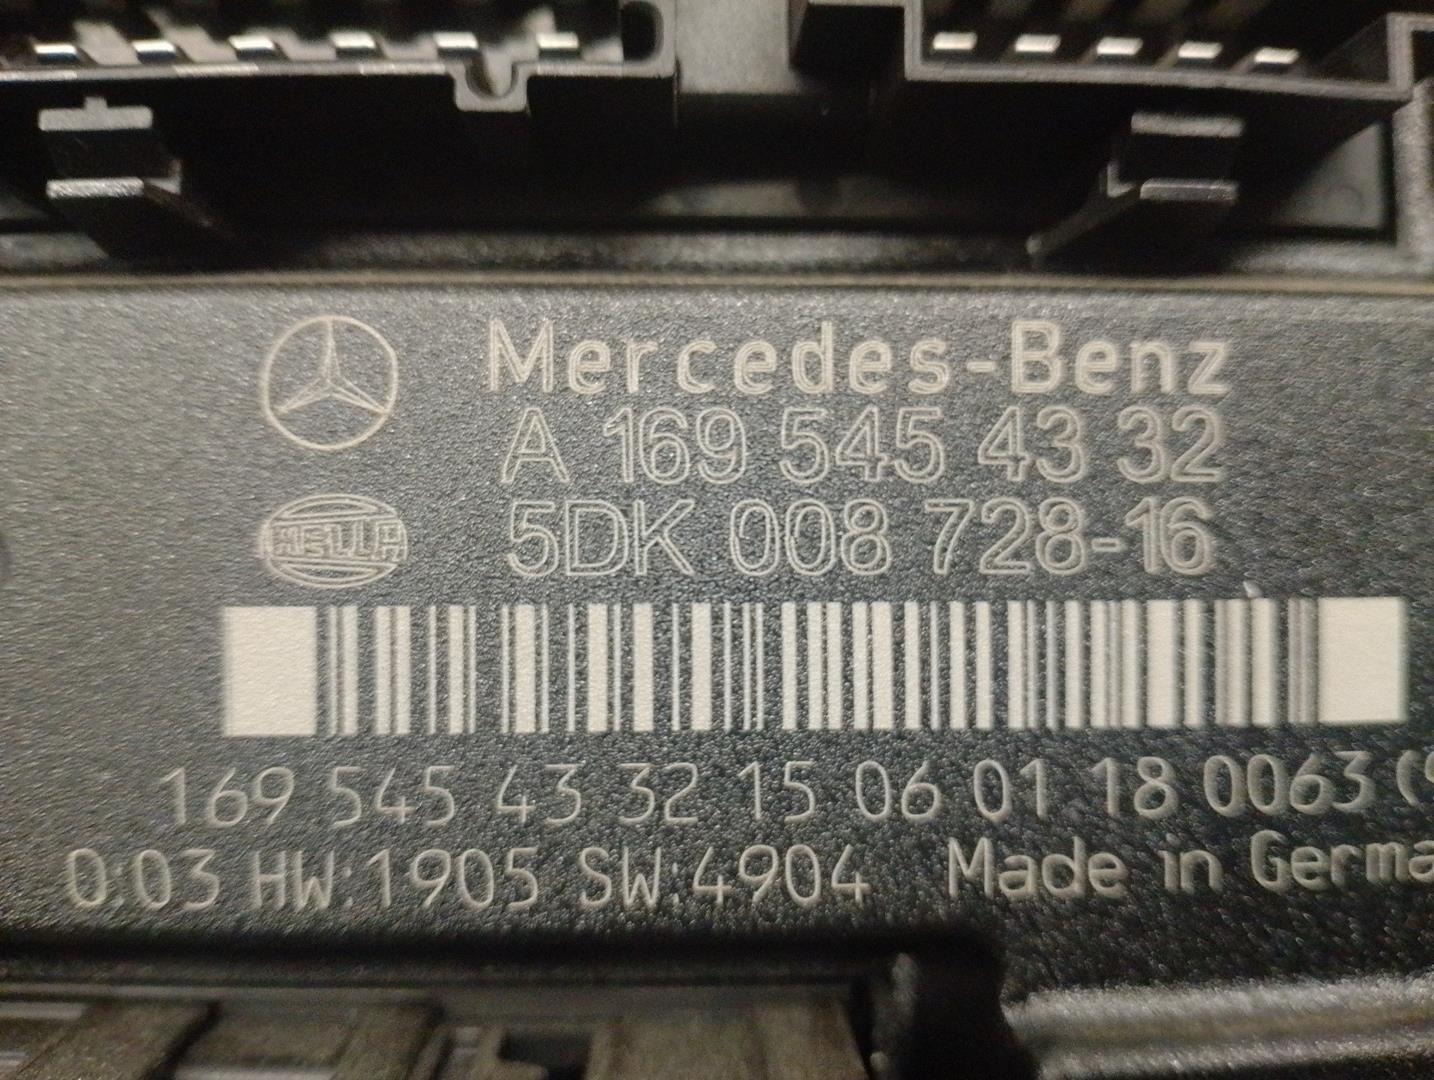 MERCEDES-BENZ B-Class W245 (2005-2011) Sikringsskap A1695454332, 5DK00872816, HELLA 24184097